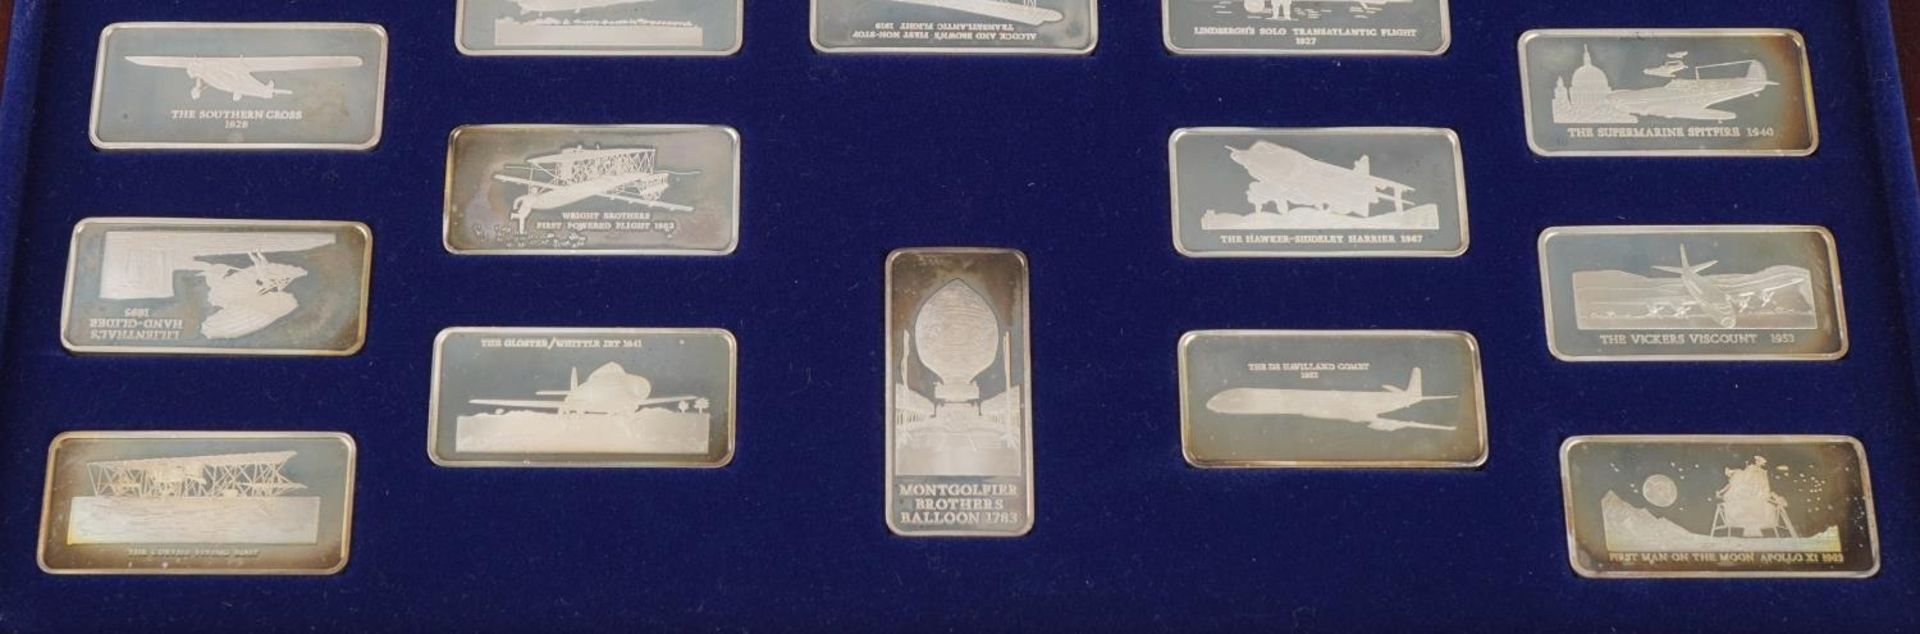 The Milestones of Manned Flight, twenty five solid silver ingots by The Birmingham Mint housed in - Bild 3 aus 5